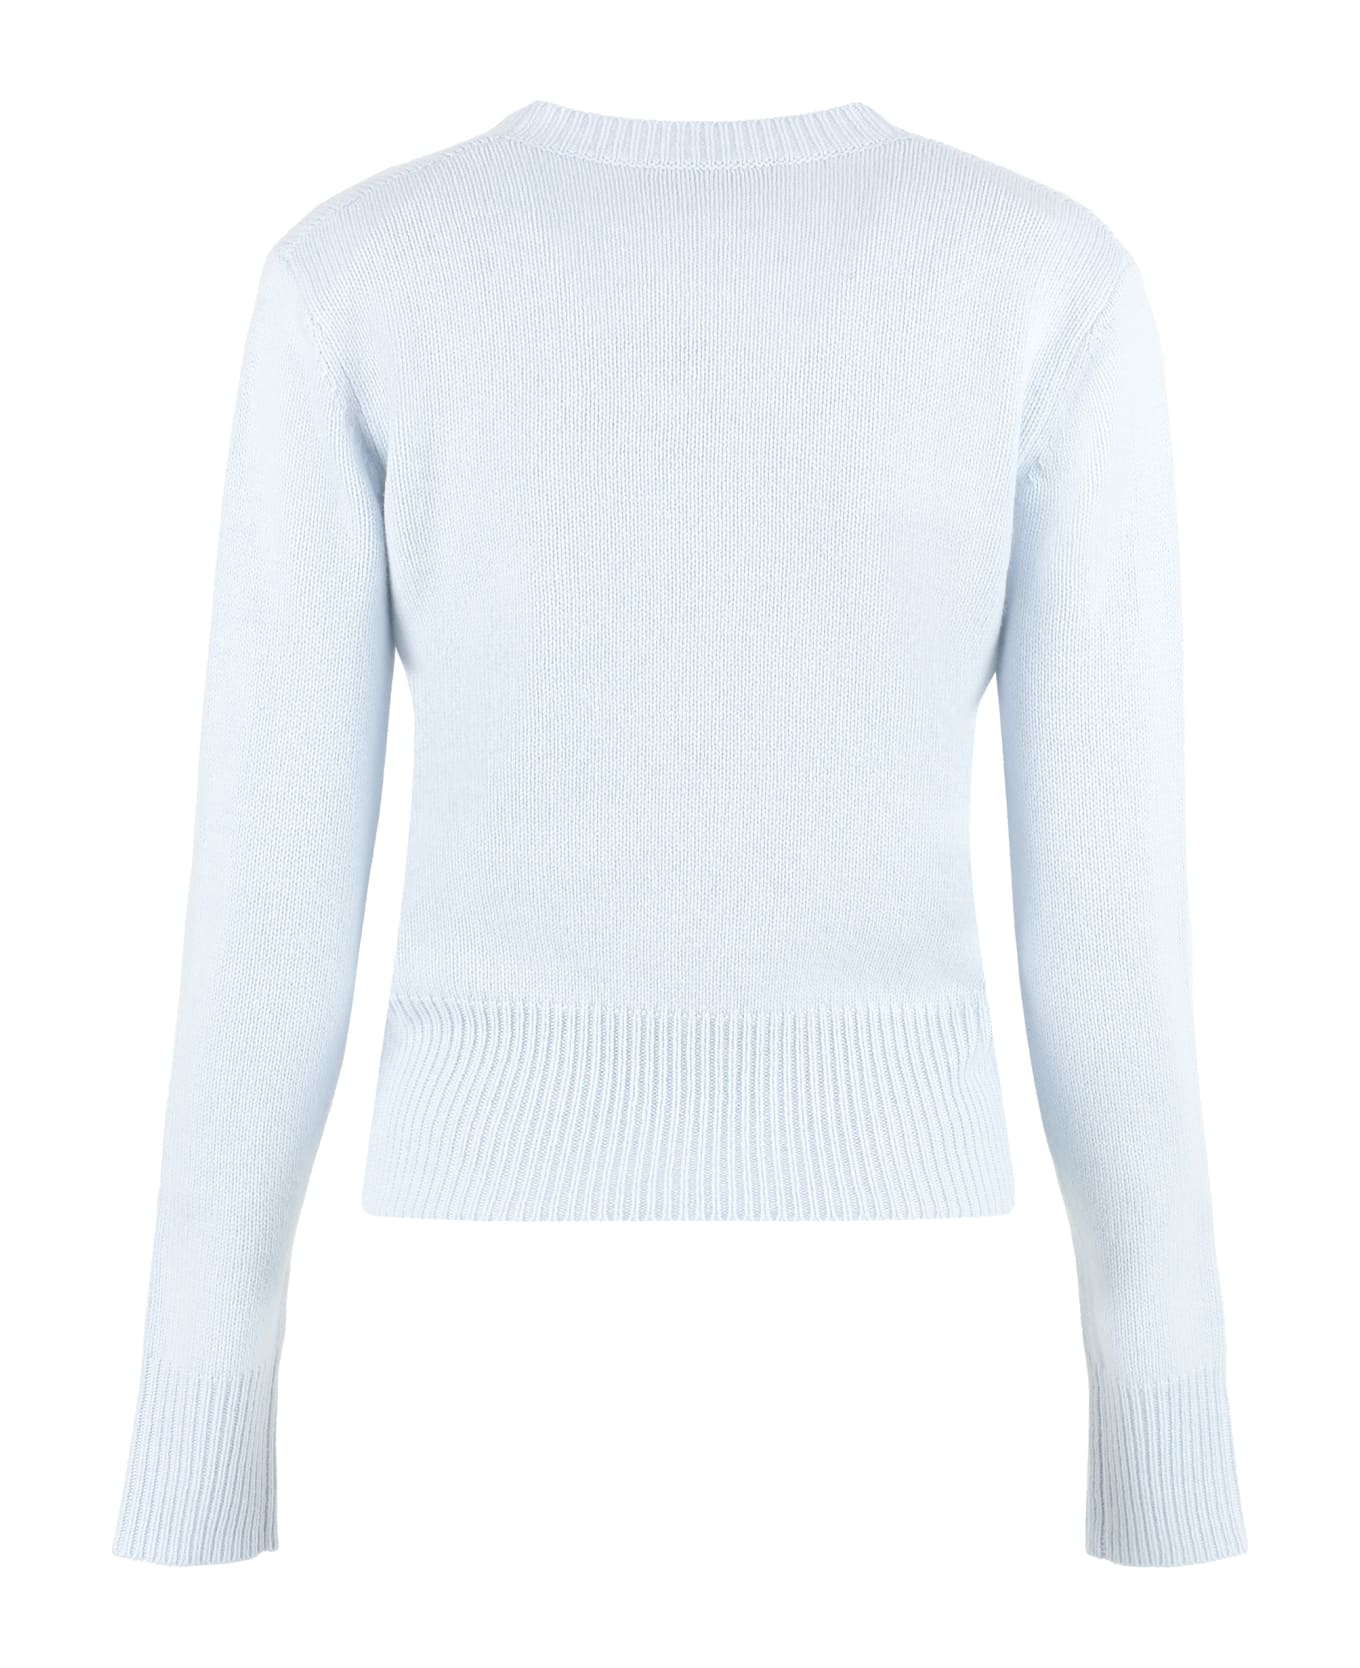 Max Mara Studio Cashmere V-neck Sweater - Light Blue ニットウェア